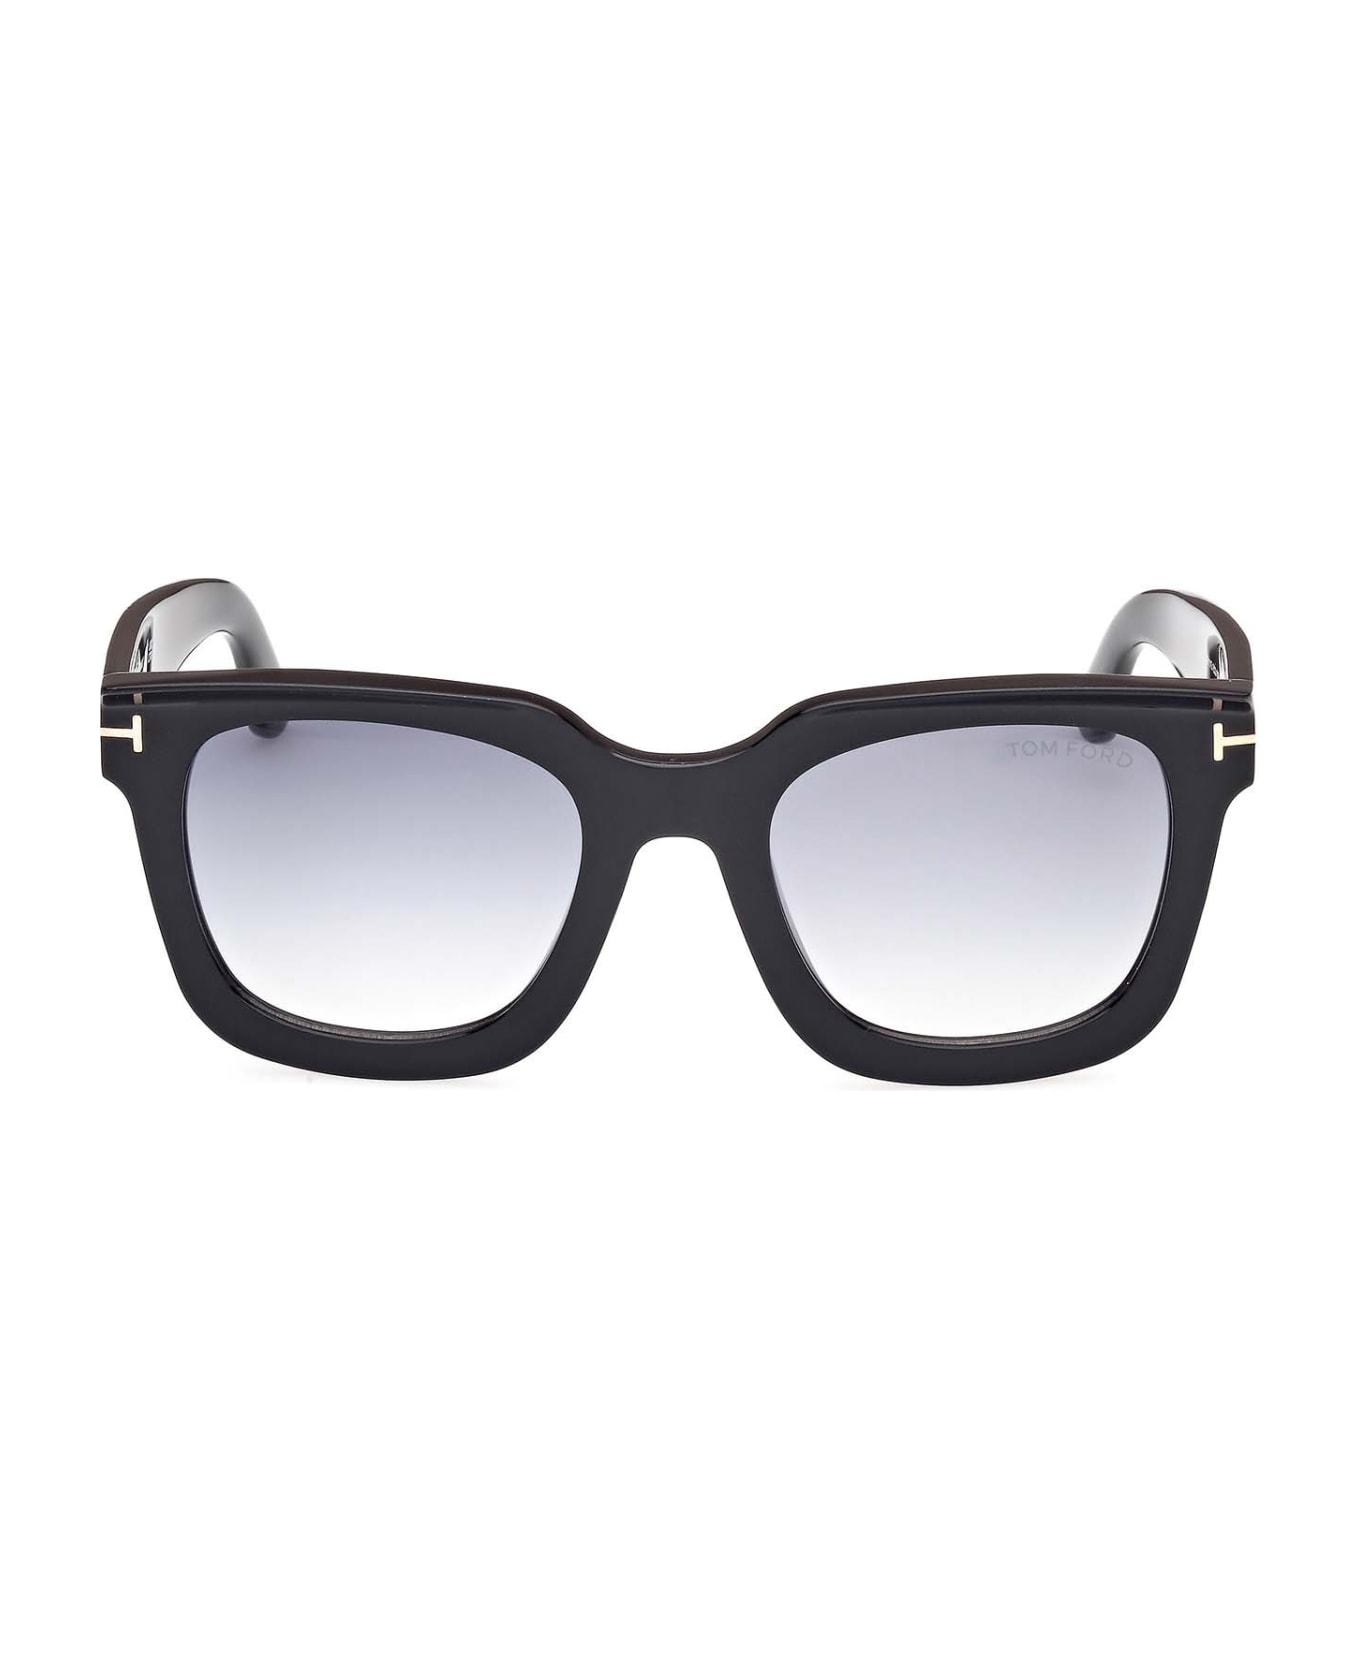 Tom Ford Eyewear Sunglasses - Nero/Grigio sfumato